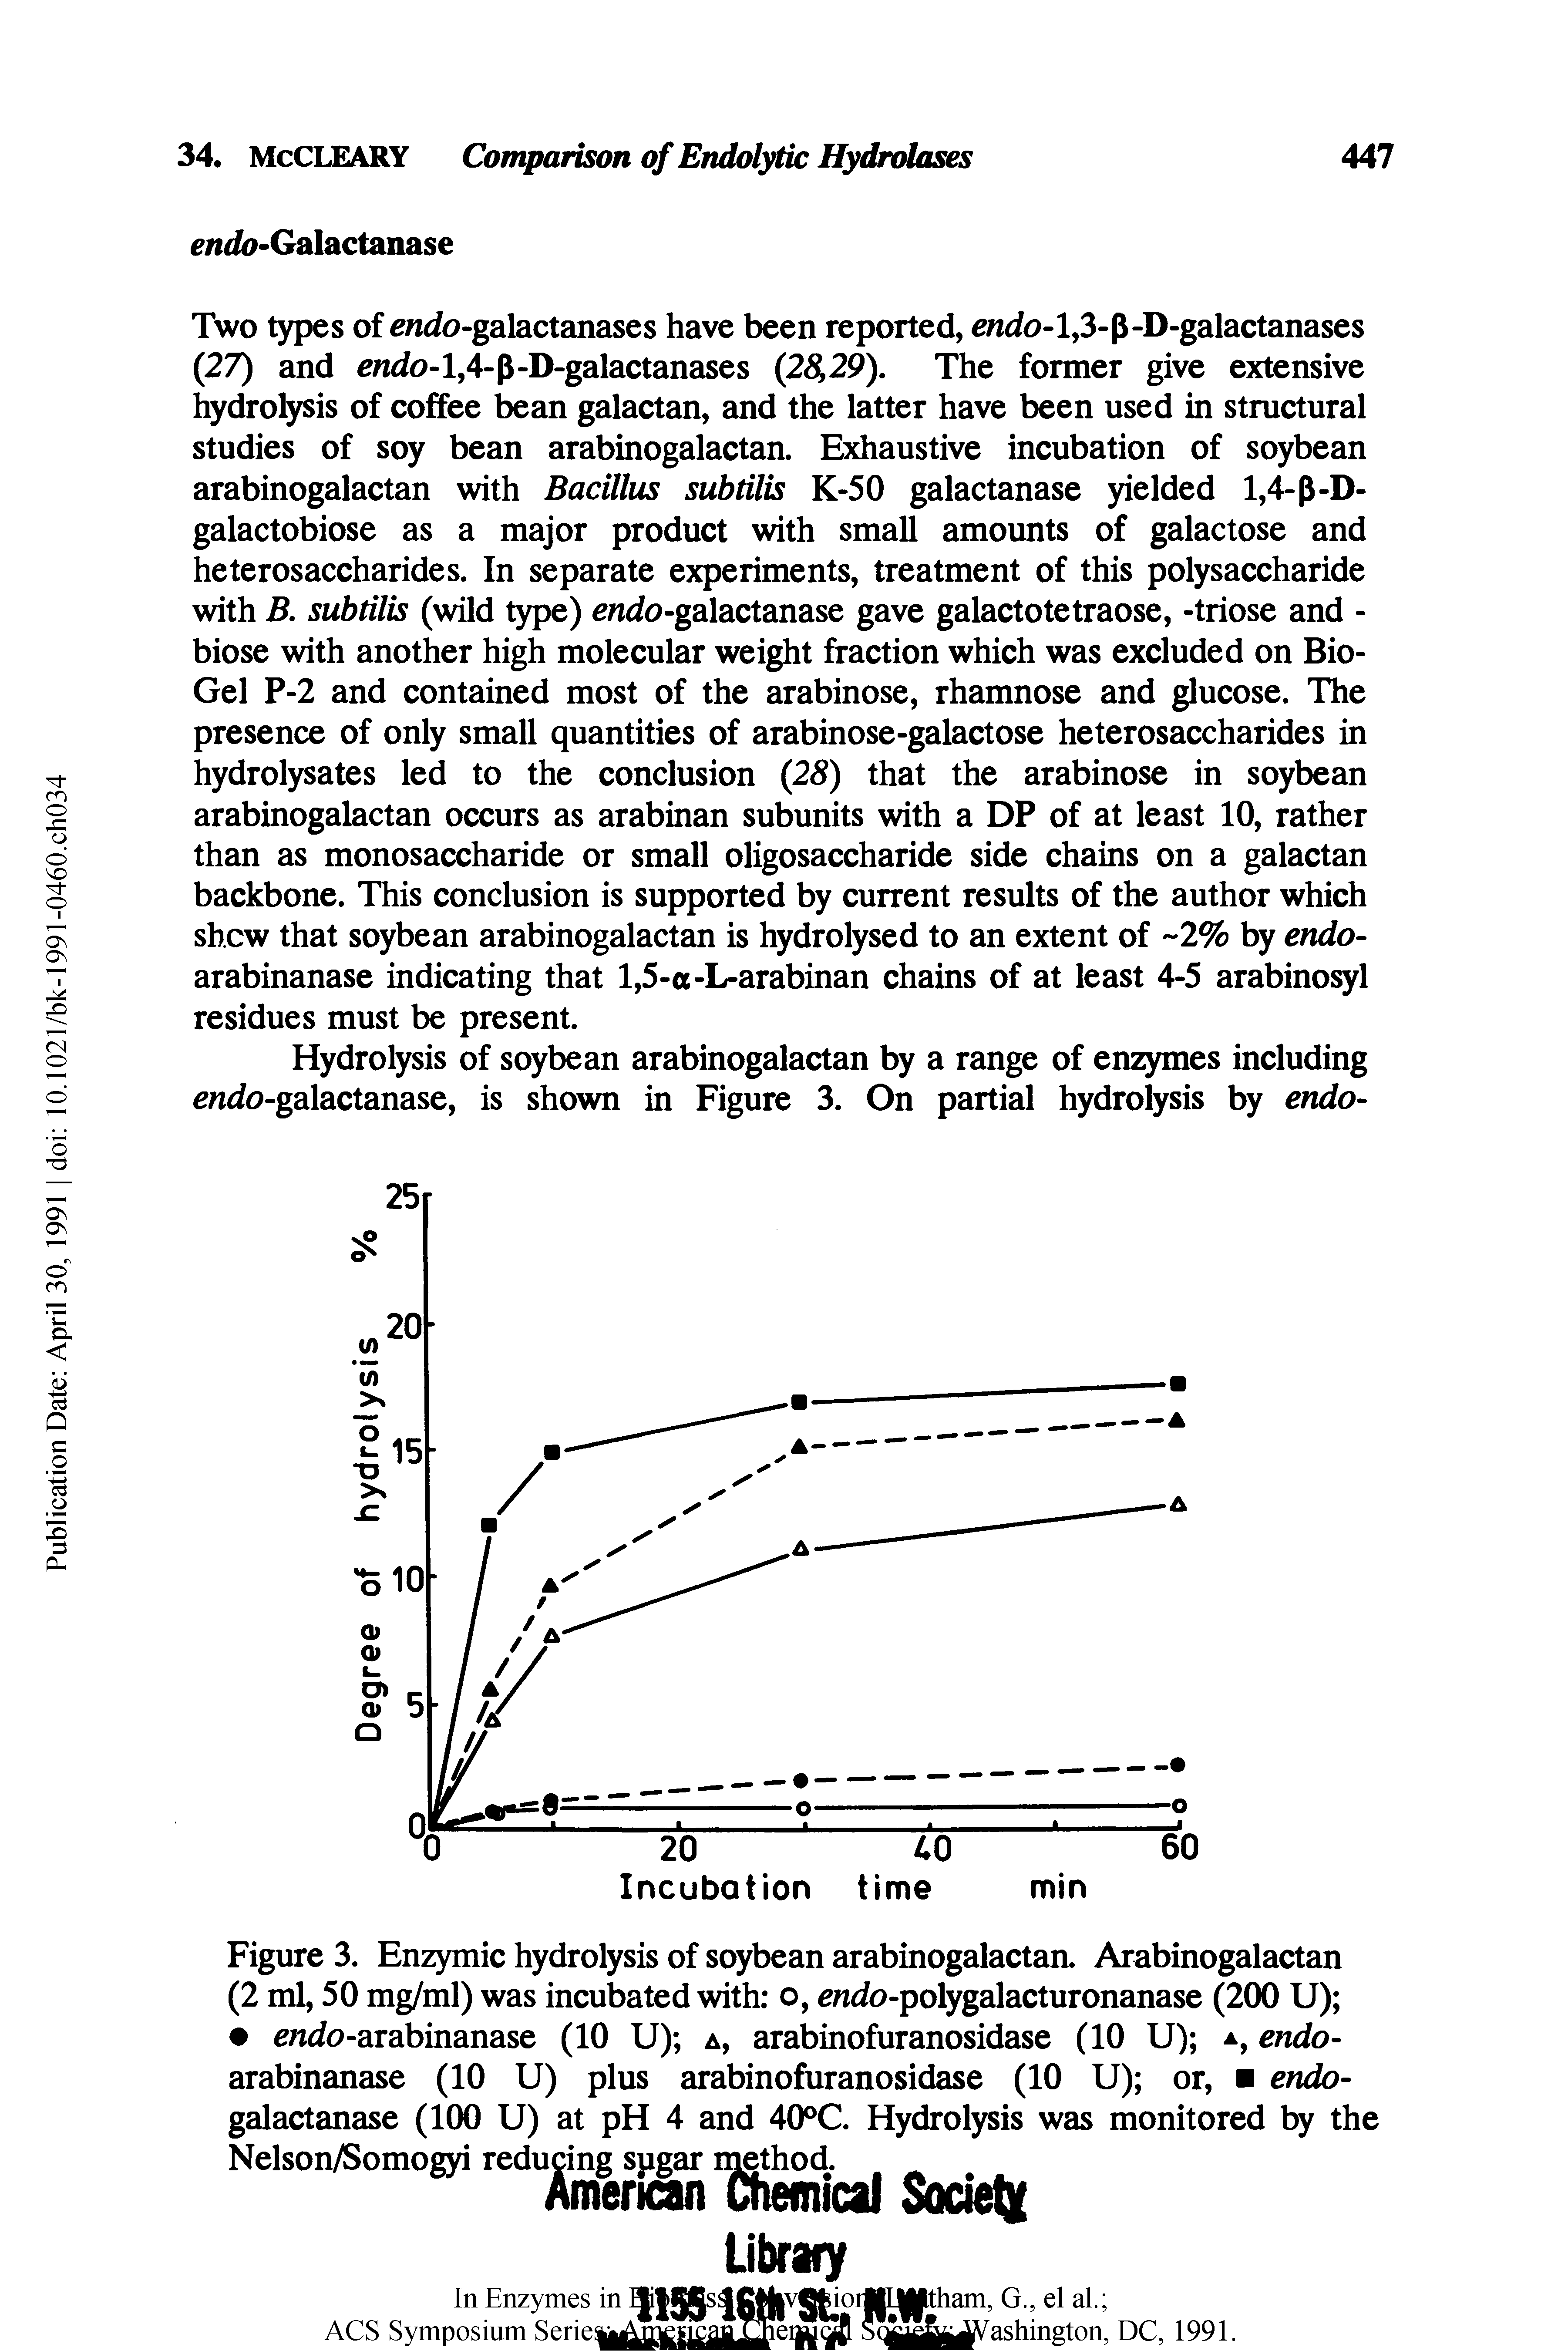 Figure 3. Enzymic hydrolysis of soybean arabinogalactan. Arabinogalactan (2 ml, 50 mg/ml) was incubated with o, t/o-polygalacturonanase (200 U) ...